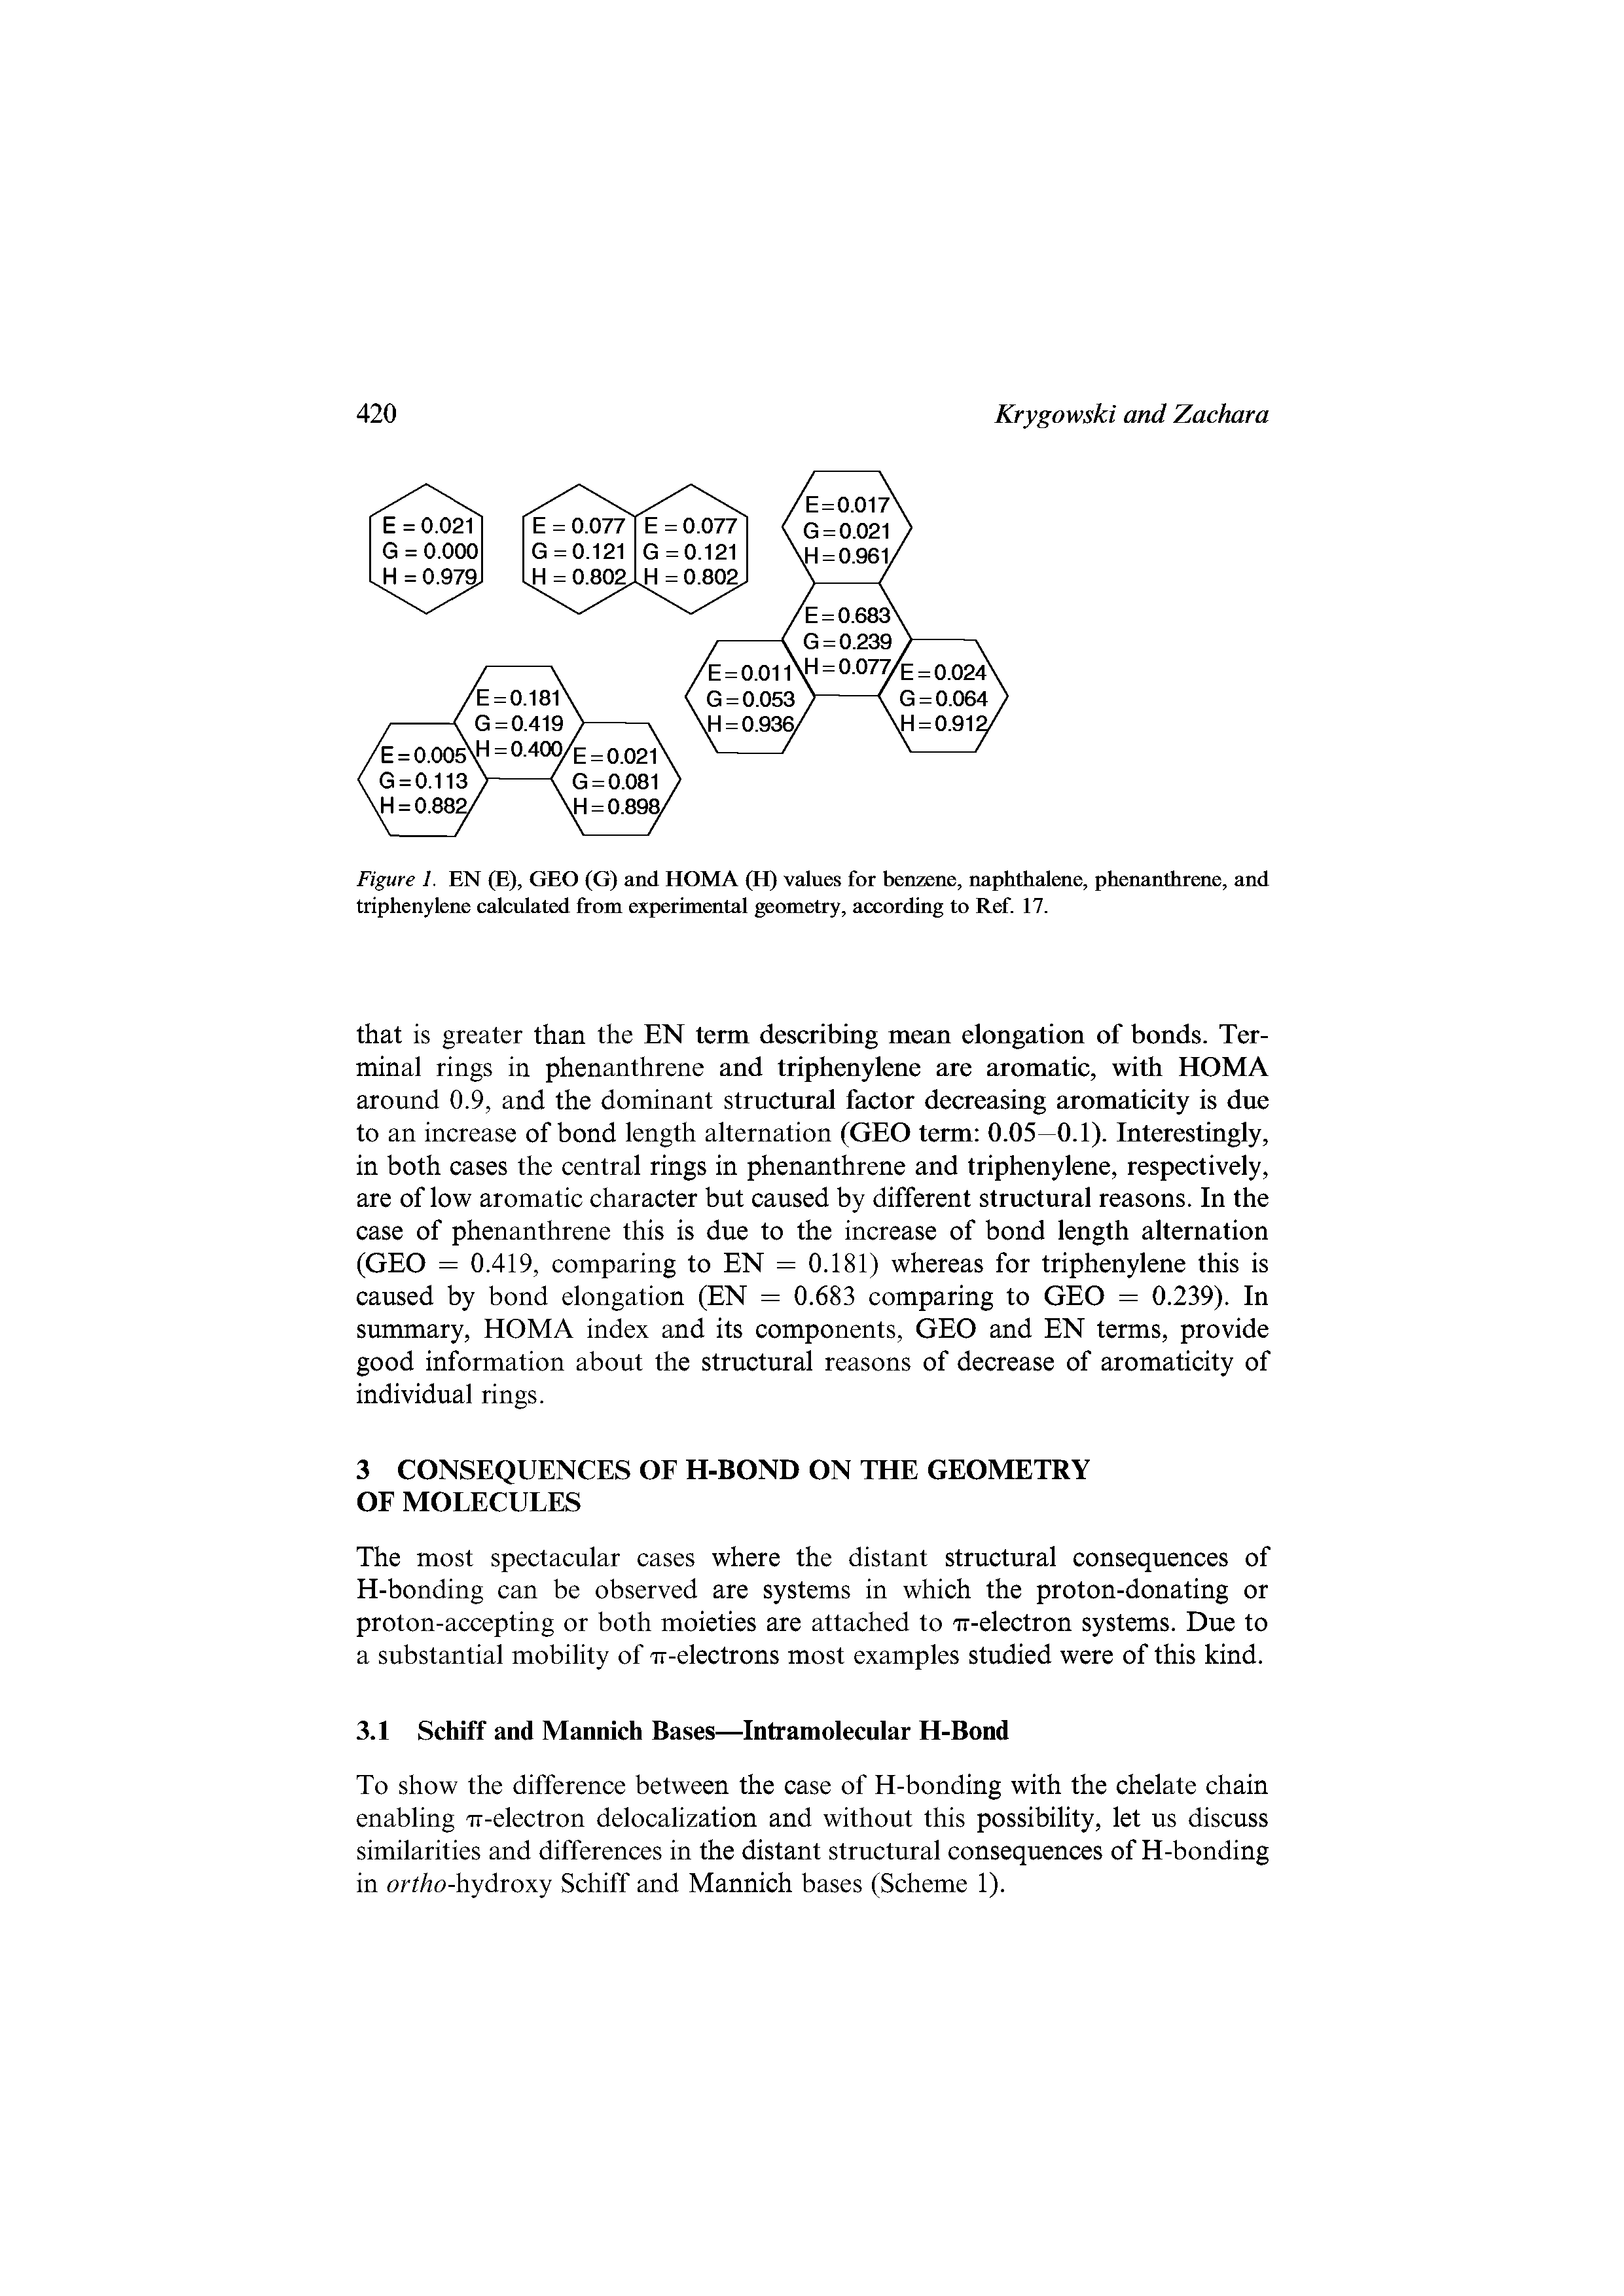 Figure I. EN (E), GEO (G) and HOMA (H) values for benzene, naphthalene, phenanthrene, and triphenylene ealeulated from experimental geometry, aecording to Ref 17.